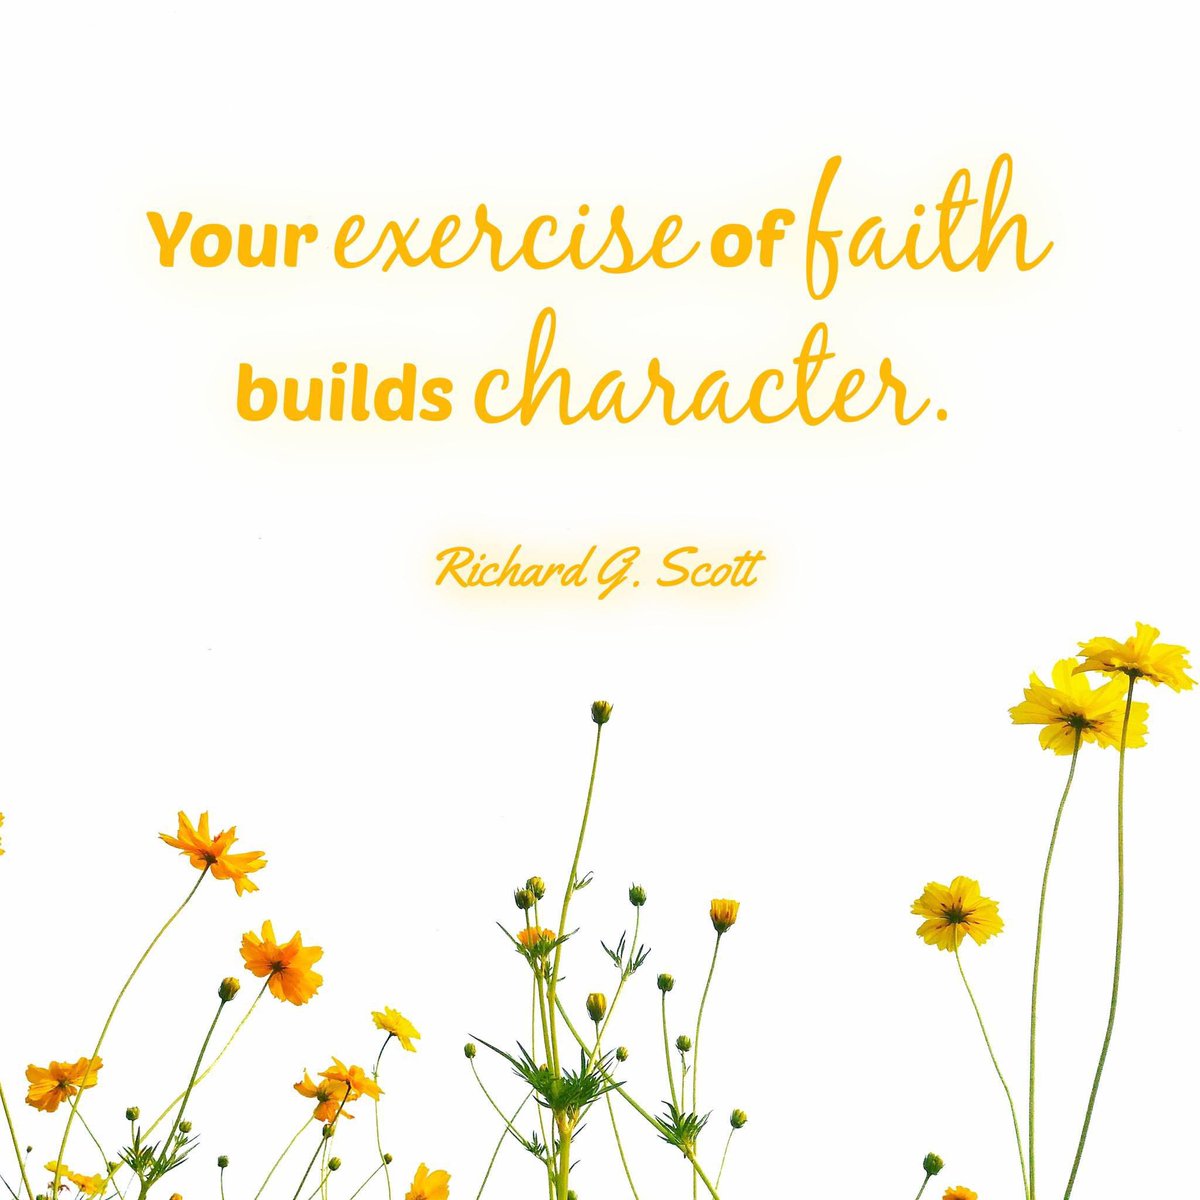 “Your exercise of faith builds character.” ~ Elder Richard G. Scott

#FaithCounts #HearHim #HisDay #TrustGod #GodLovesYou #ComeUntoChrist #CountOnHim #EmbraceHim #ChildOfGod #ShareGoodness #BestDay #TheChurchOfJesusChristOfLatterDaySaints